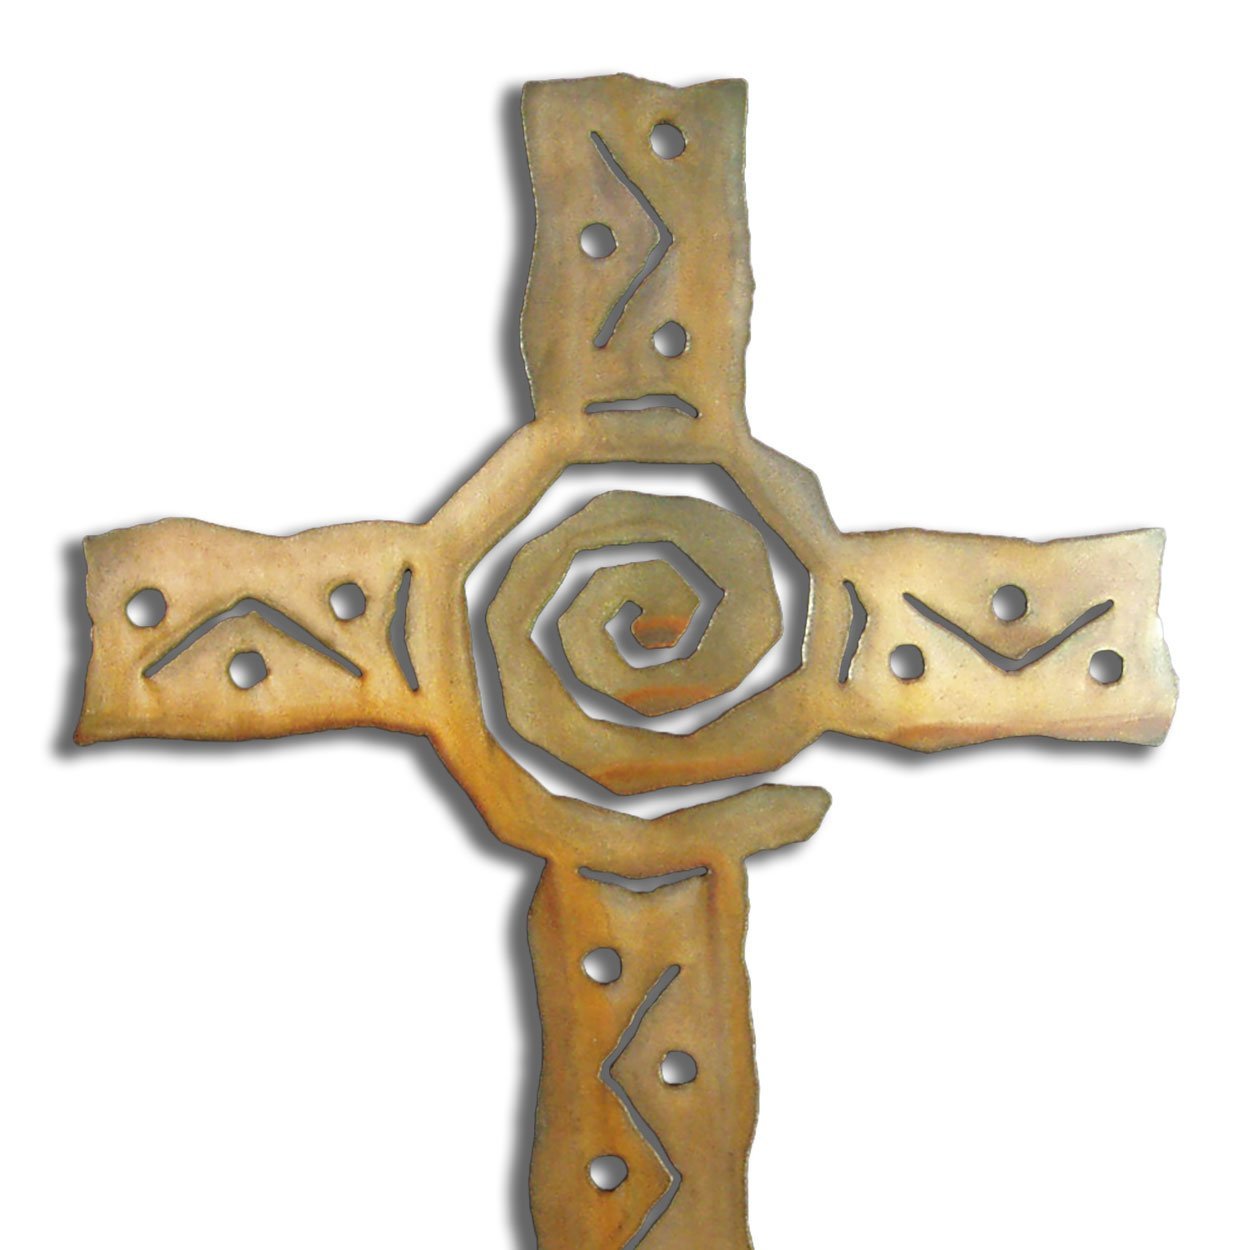 165241 - 12-inch small Spiral Cross 3D Metal Wall Art in a rich rust finish